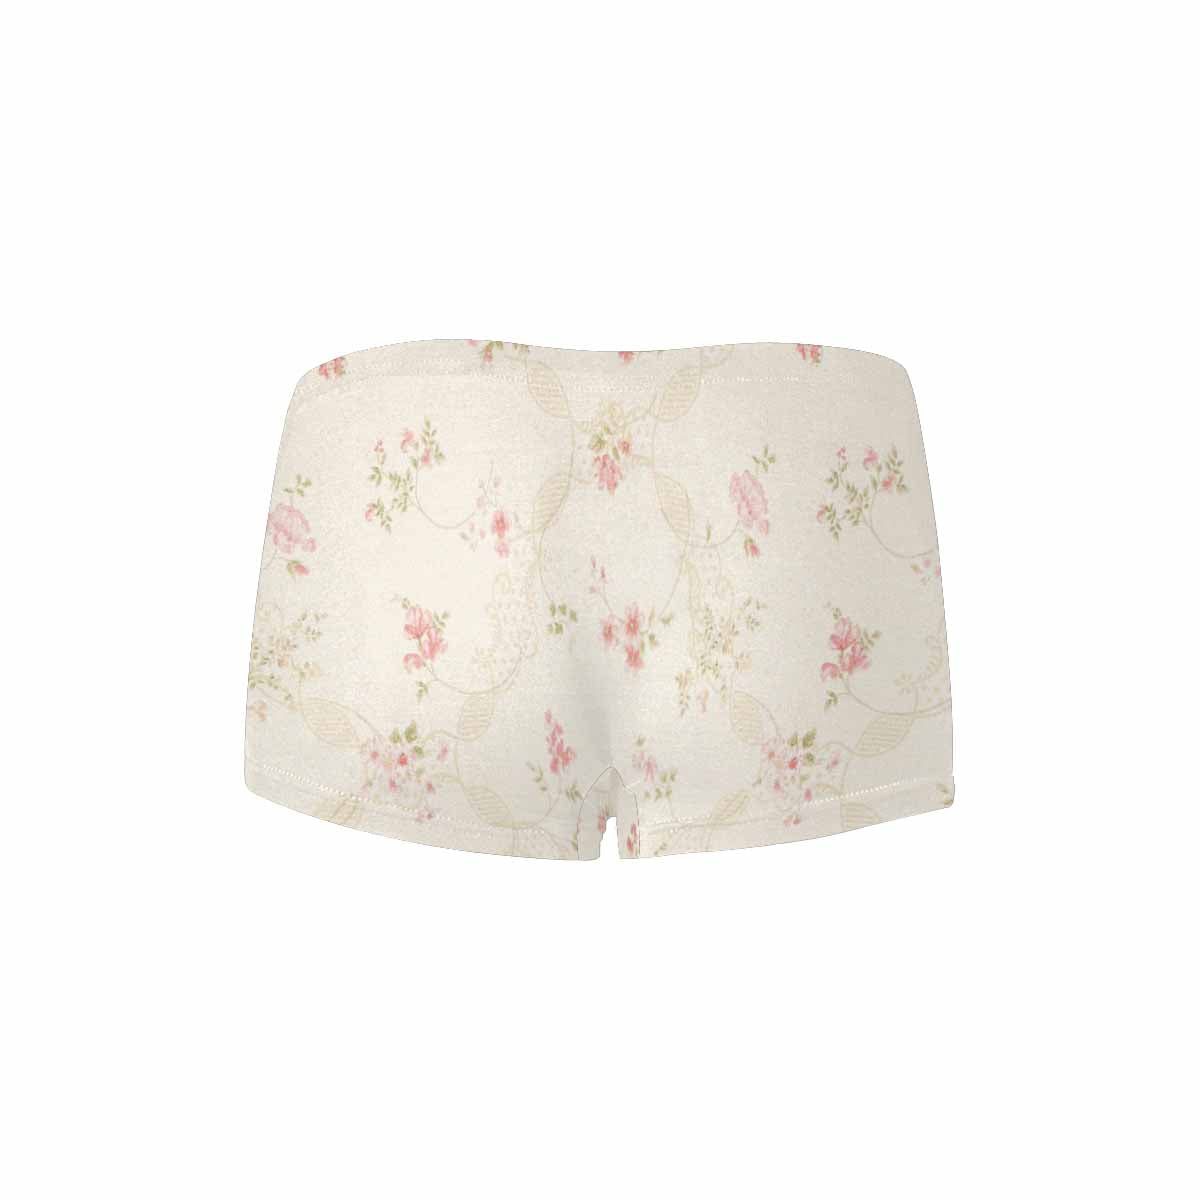 Floral 2, boyshorts, daisy dukes, pum pum shorts, panties, design 03